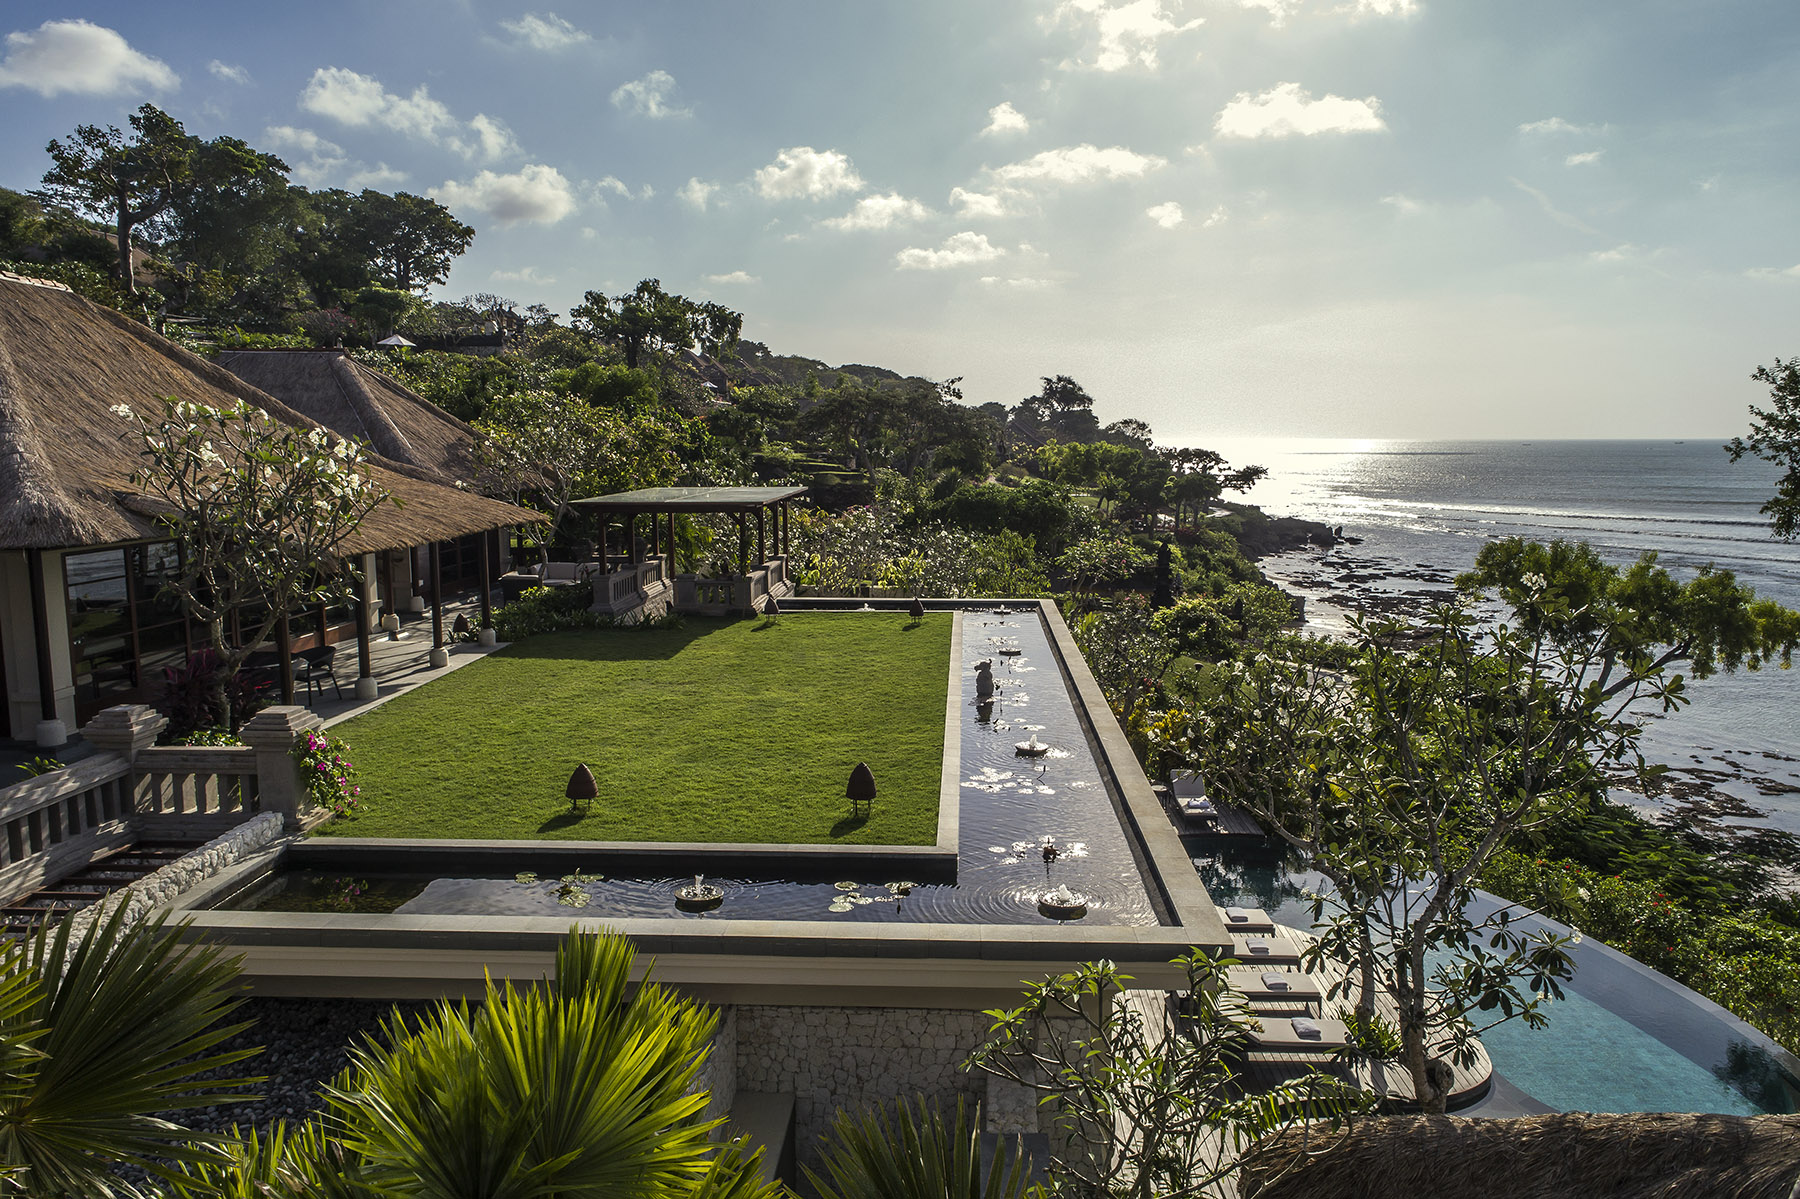 Iconic Four Seasons Resort Bali at Jimbaran Bay relaunches after 2-year